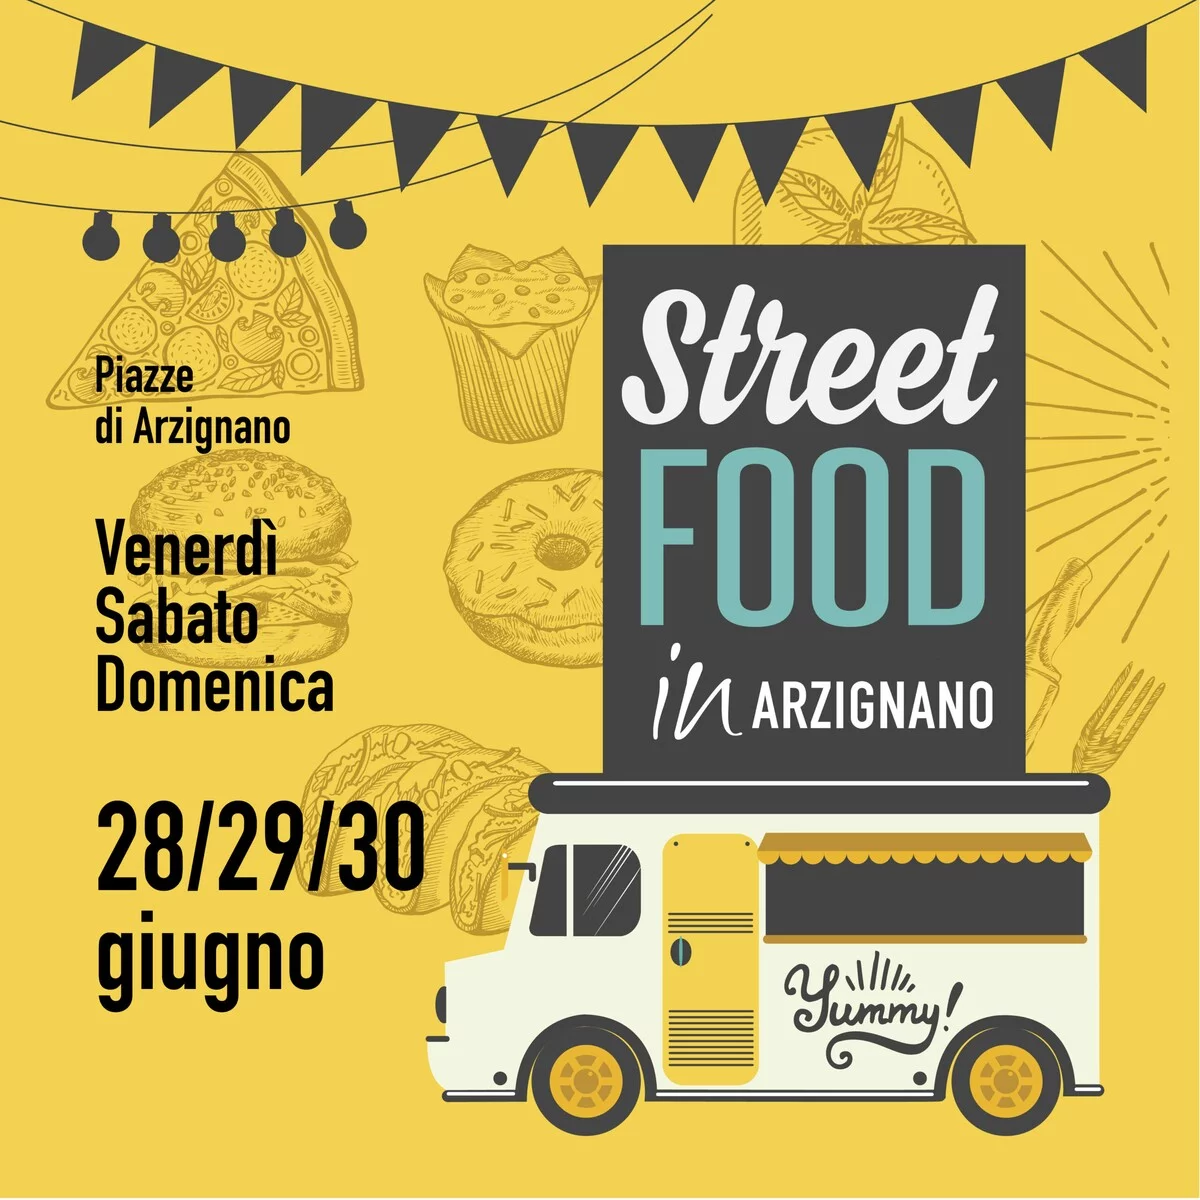 Street Food in Arzignano